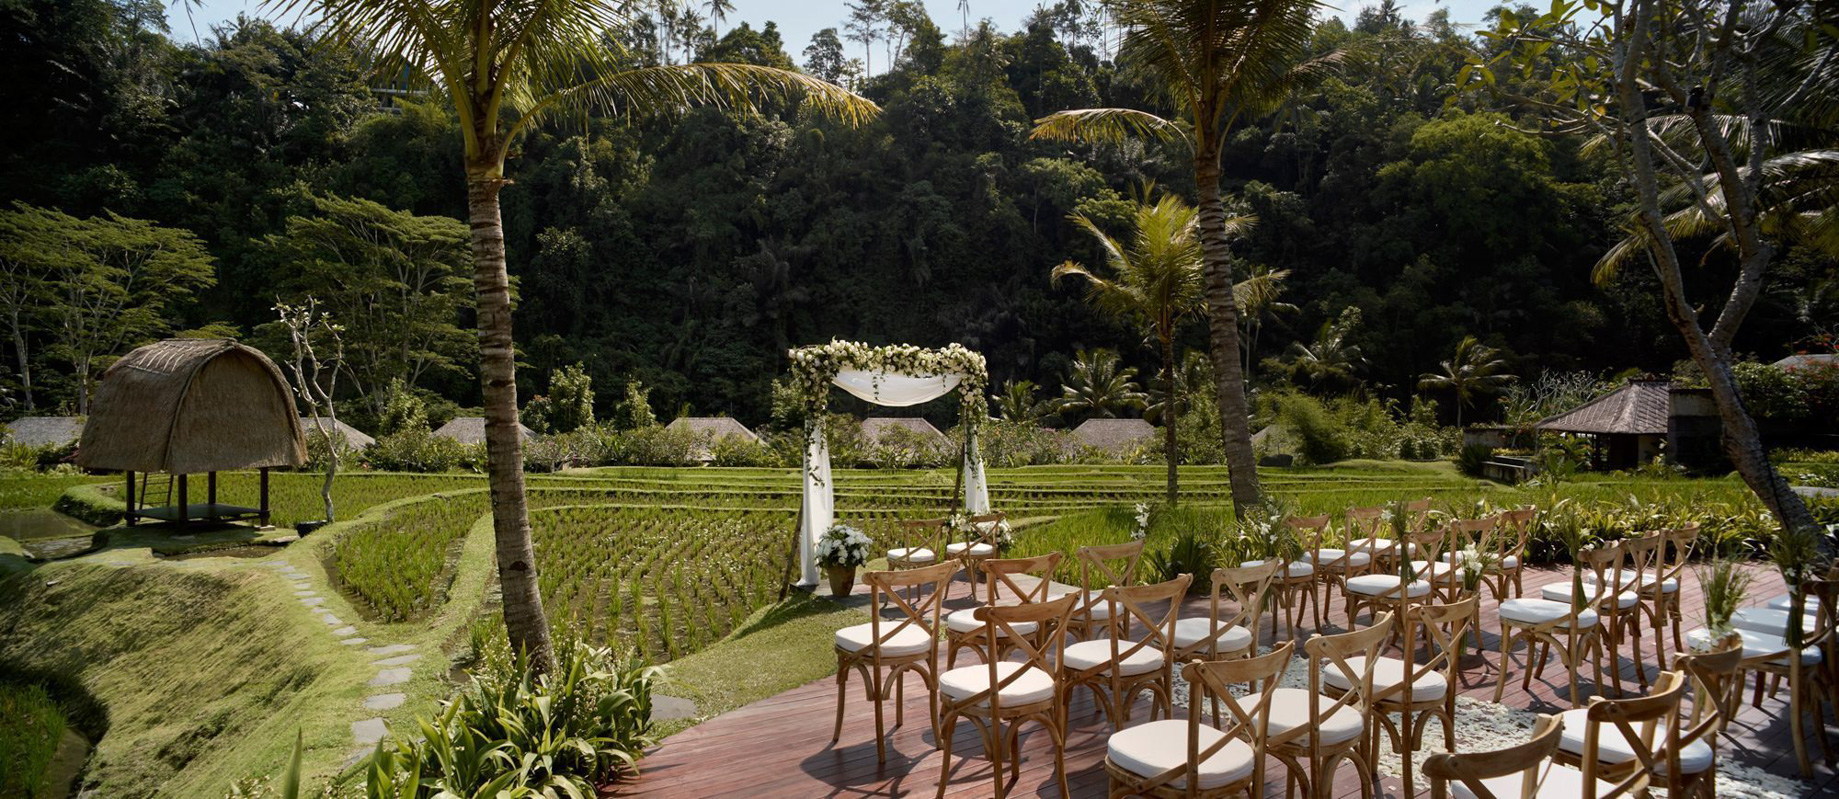 The Ritz-Carlton, Mandapa Reserve Resort – Ubud, Bali, Indonesia – Resort Wedding